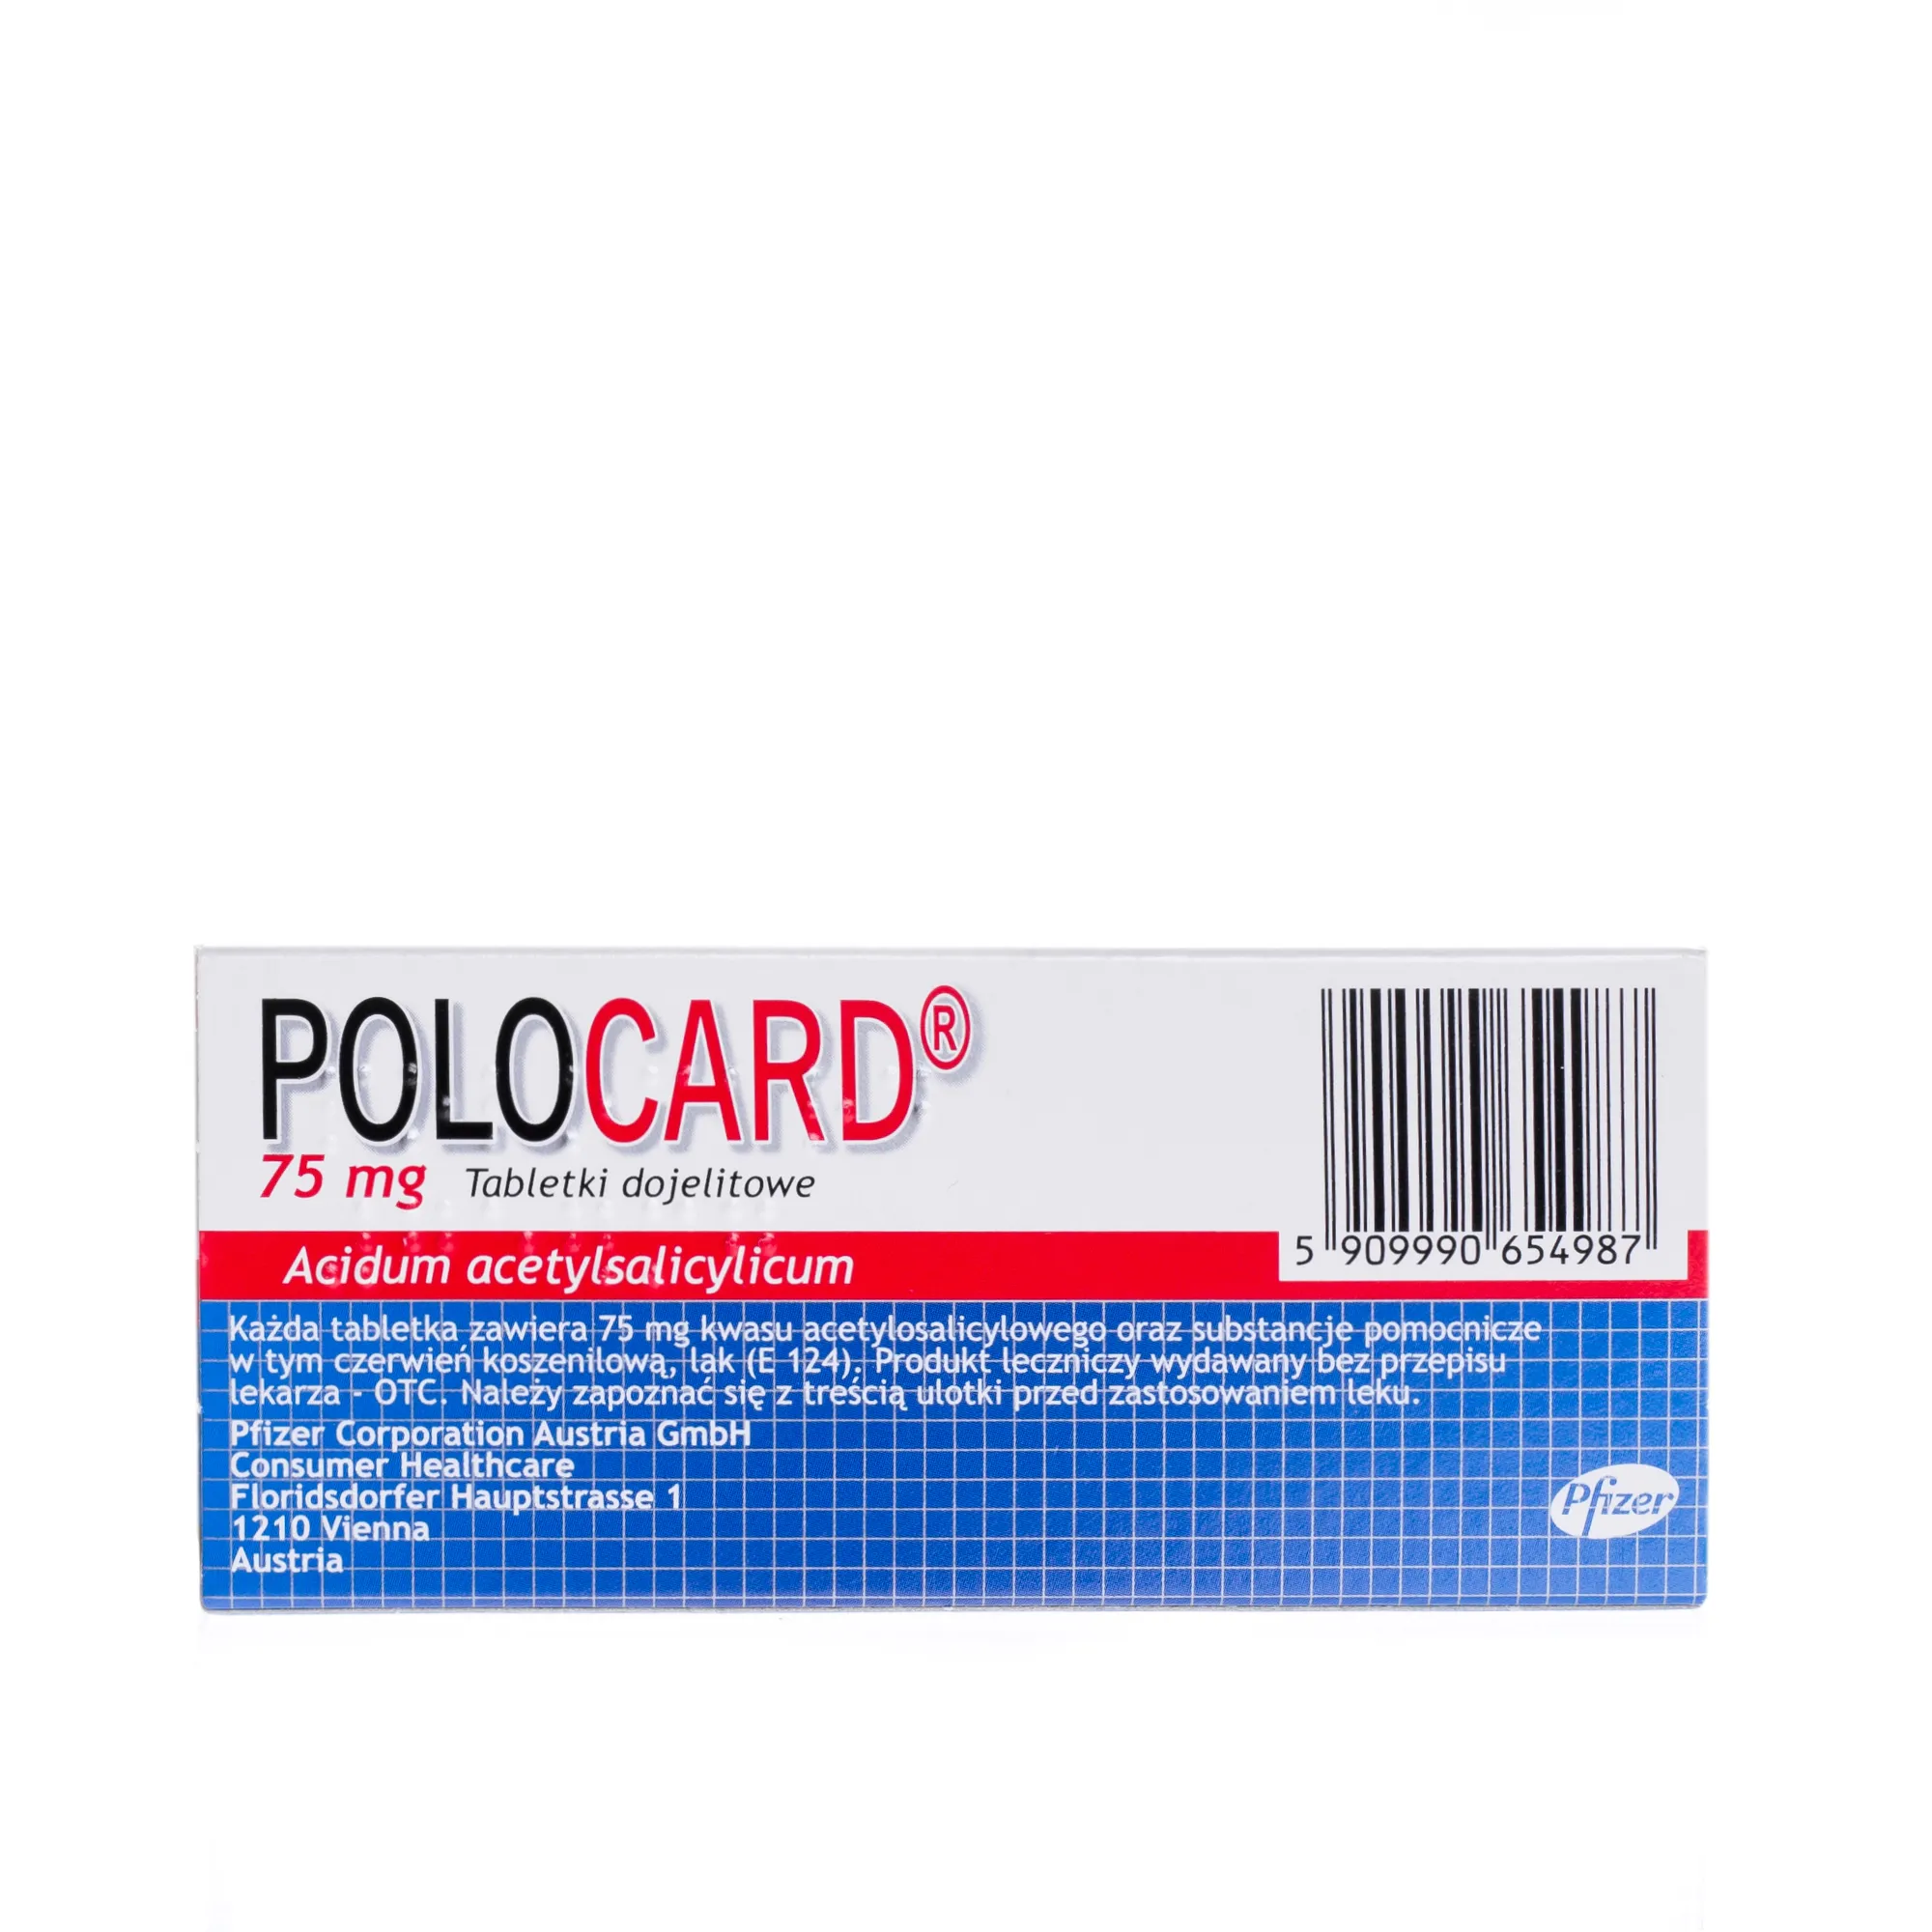 Polocard 75 mg, 60 tabletek 